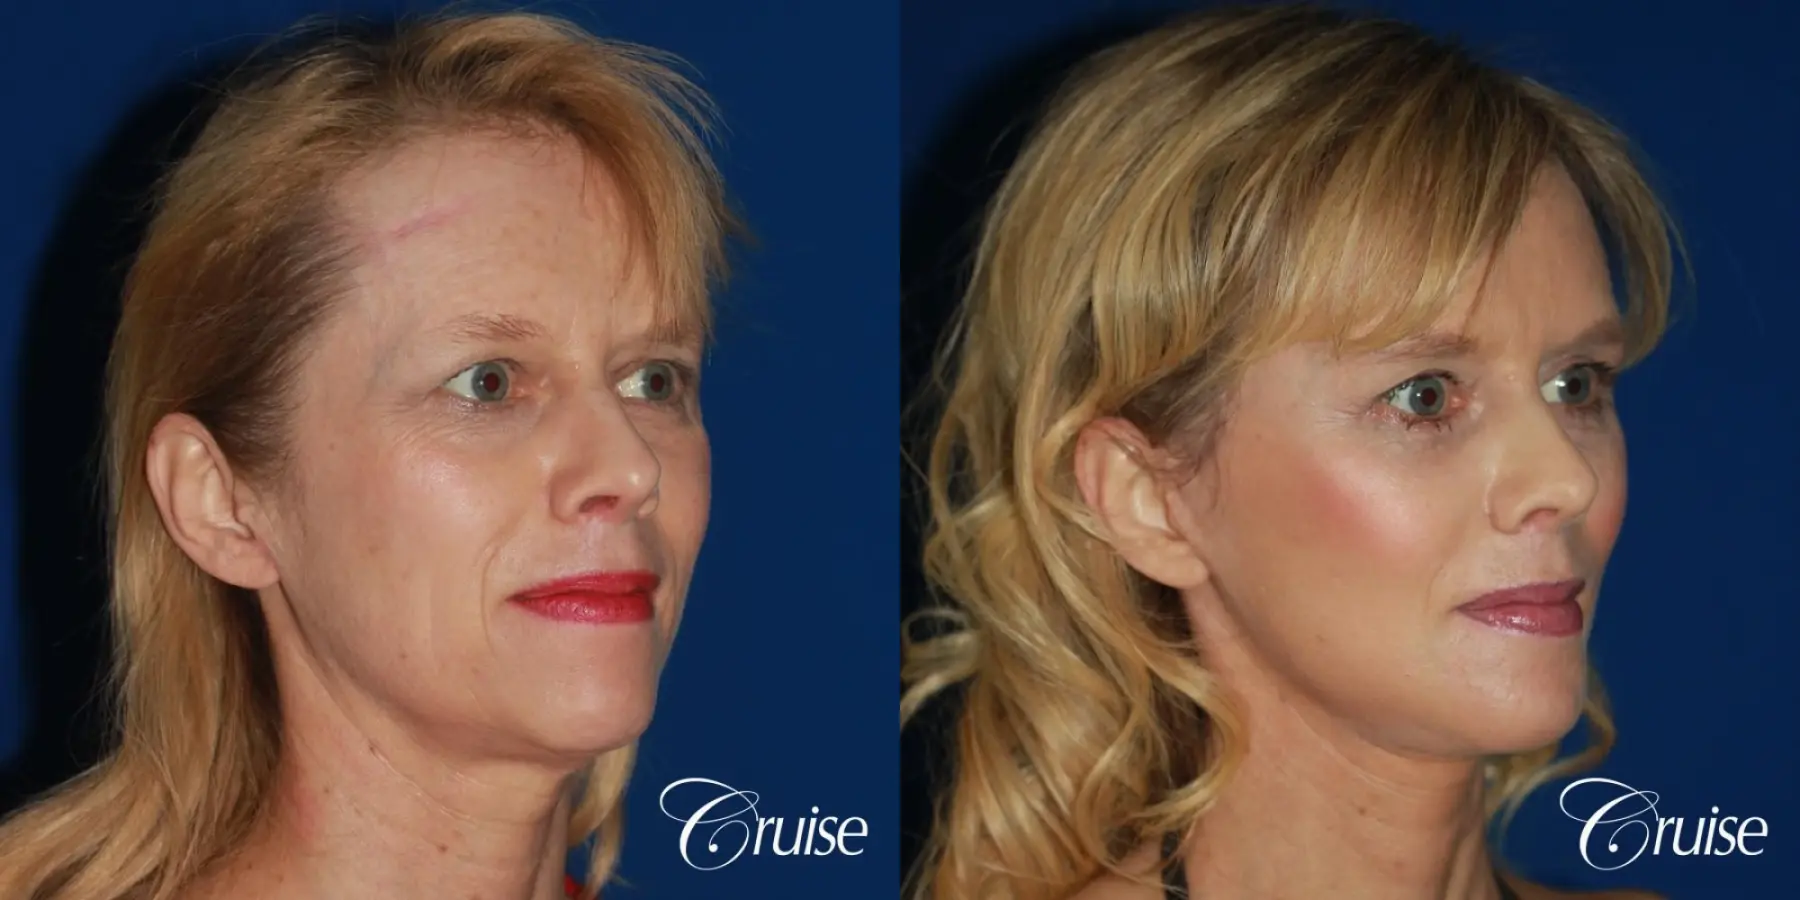 facial rejuvenation newport beach ca - Before and After 3